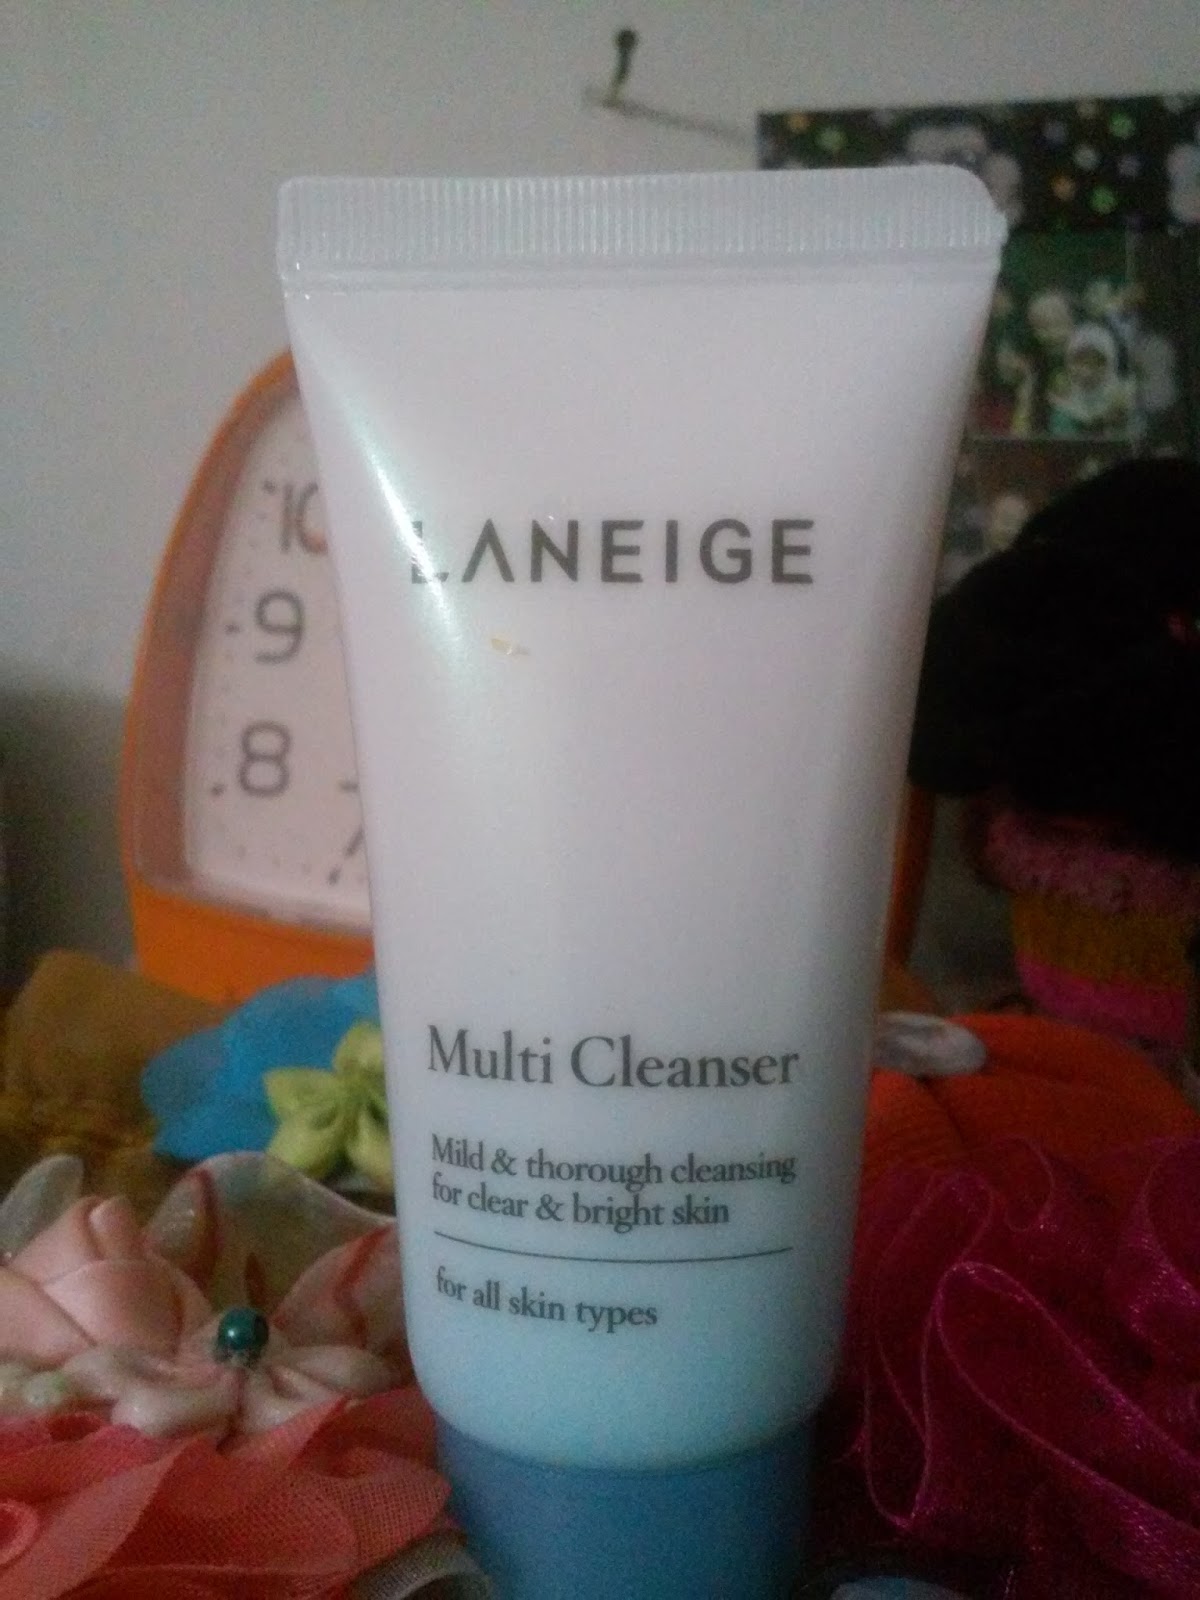 Multi cleanser. Laneige Cleanser. Laneige Multi Deep-clean Cleanser 30ml. Secret Skin cc Bubble Multi Cleanser.